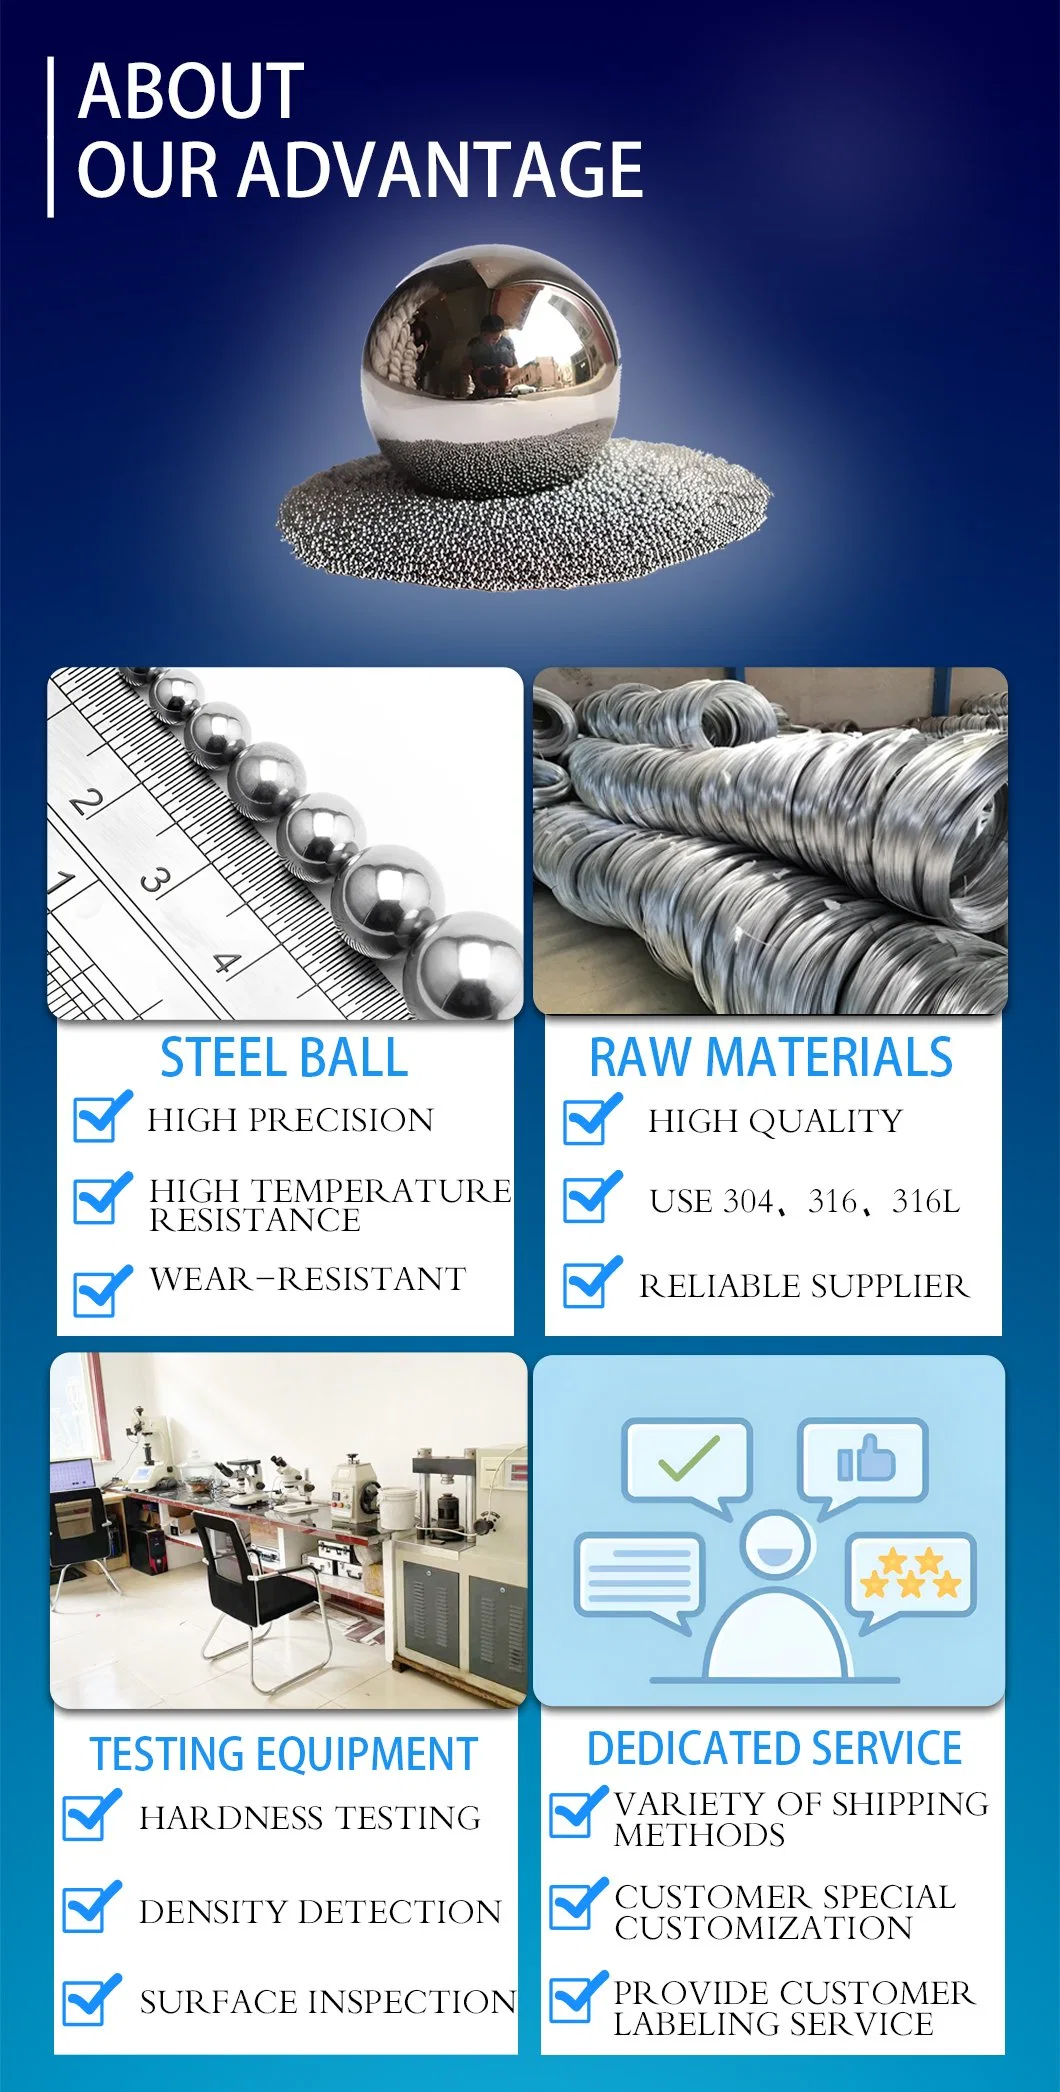 1.2mm 1.5mm 1.8mm 2.5mm 3.5mm 4.5mm 5.5mm Chrome Steel Balls for Bearing Balls